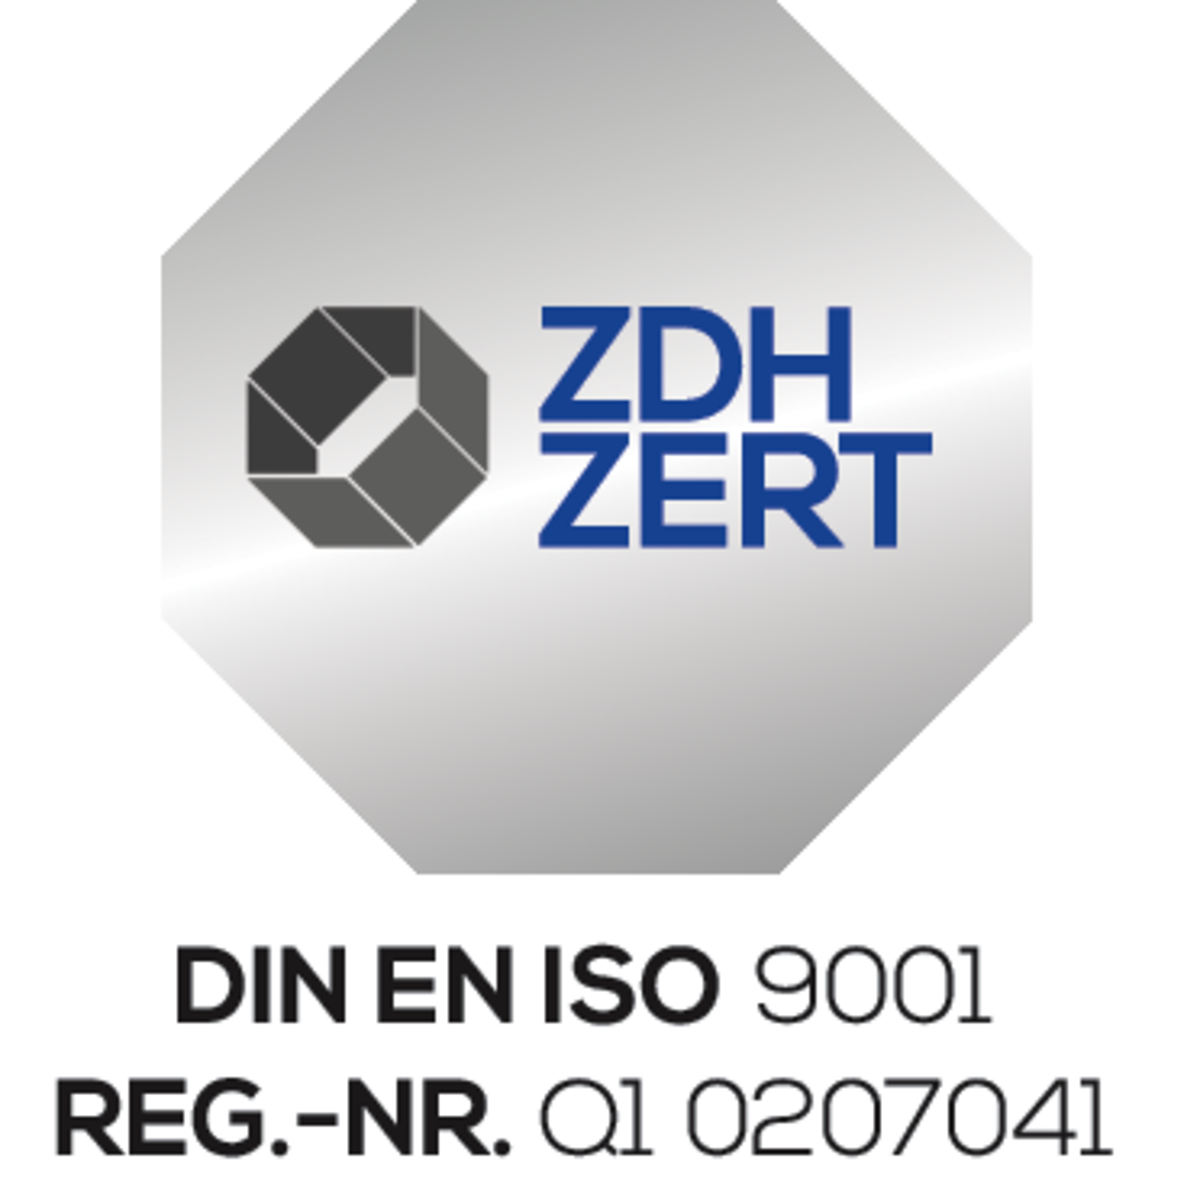 ZDH-ZERT, DIN EN ISO 9001